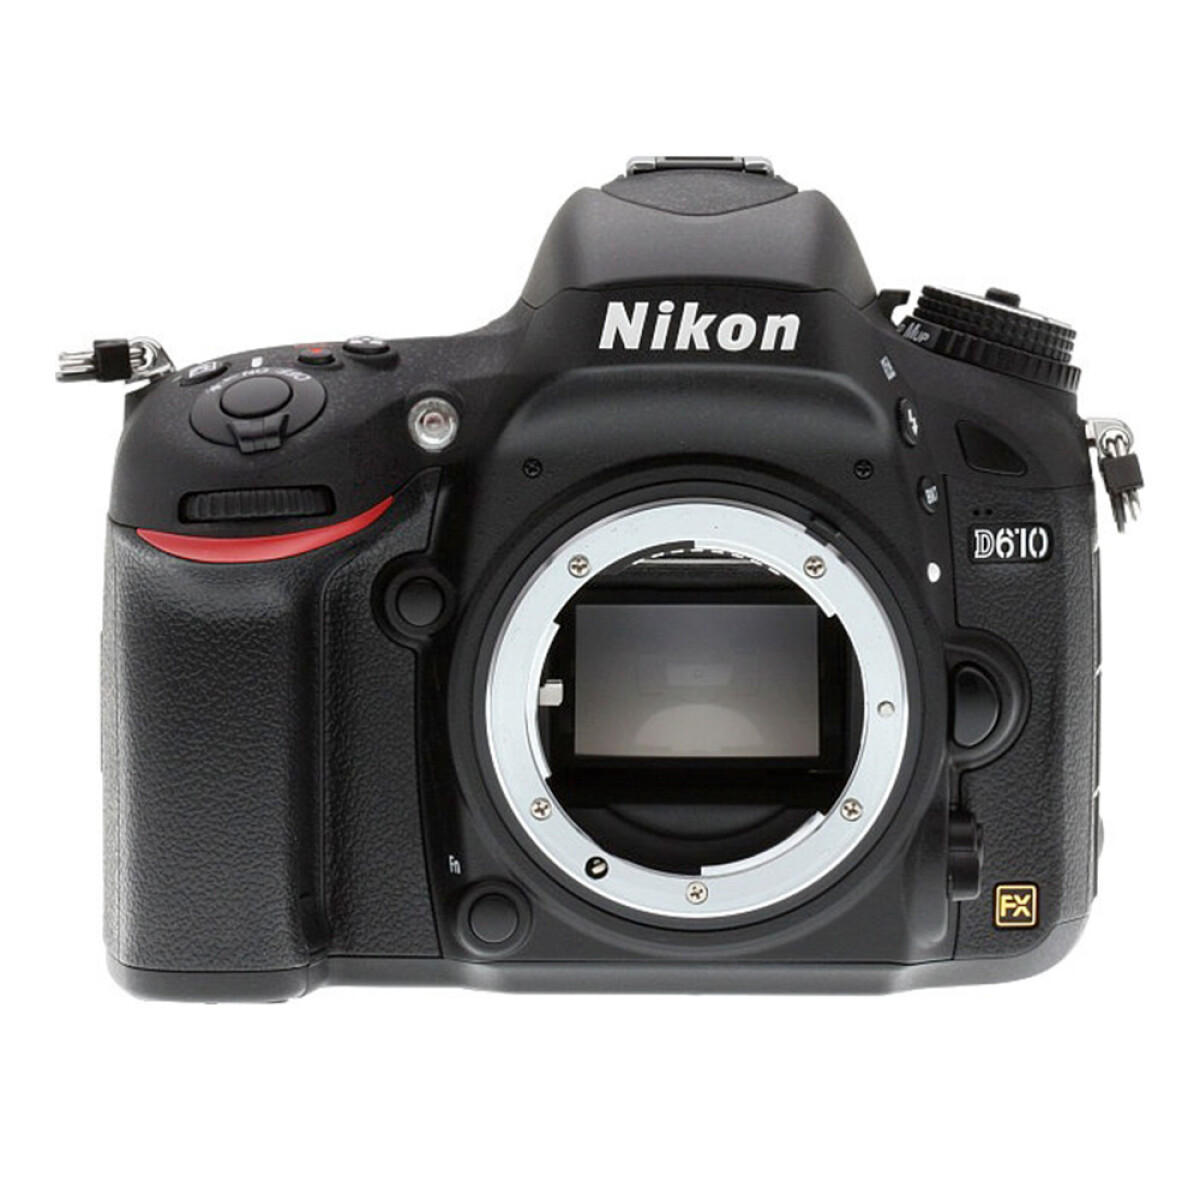 Camara Nikon D610 Profesional 24.3MP, Cuerpo sin Objetivo - 001 